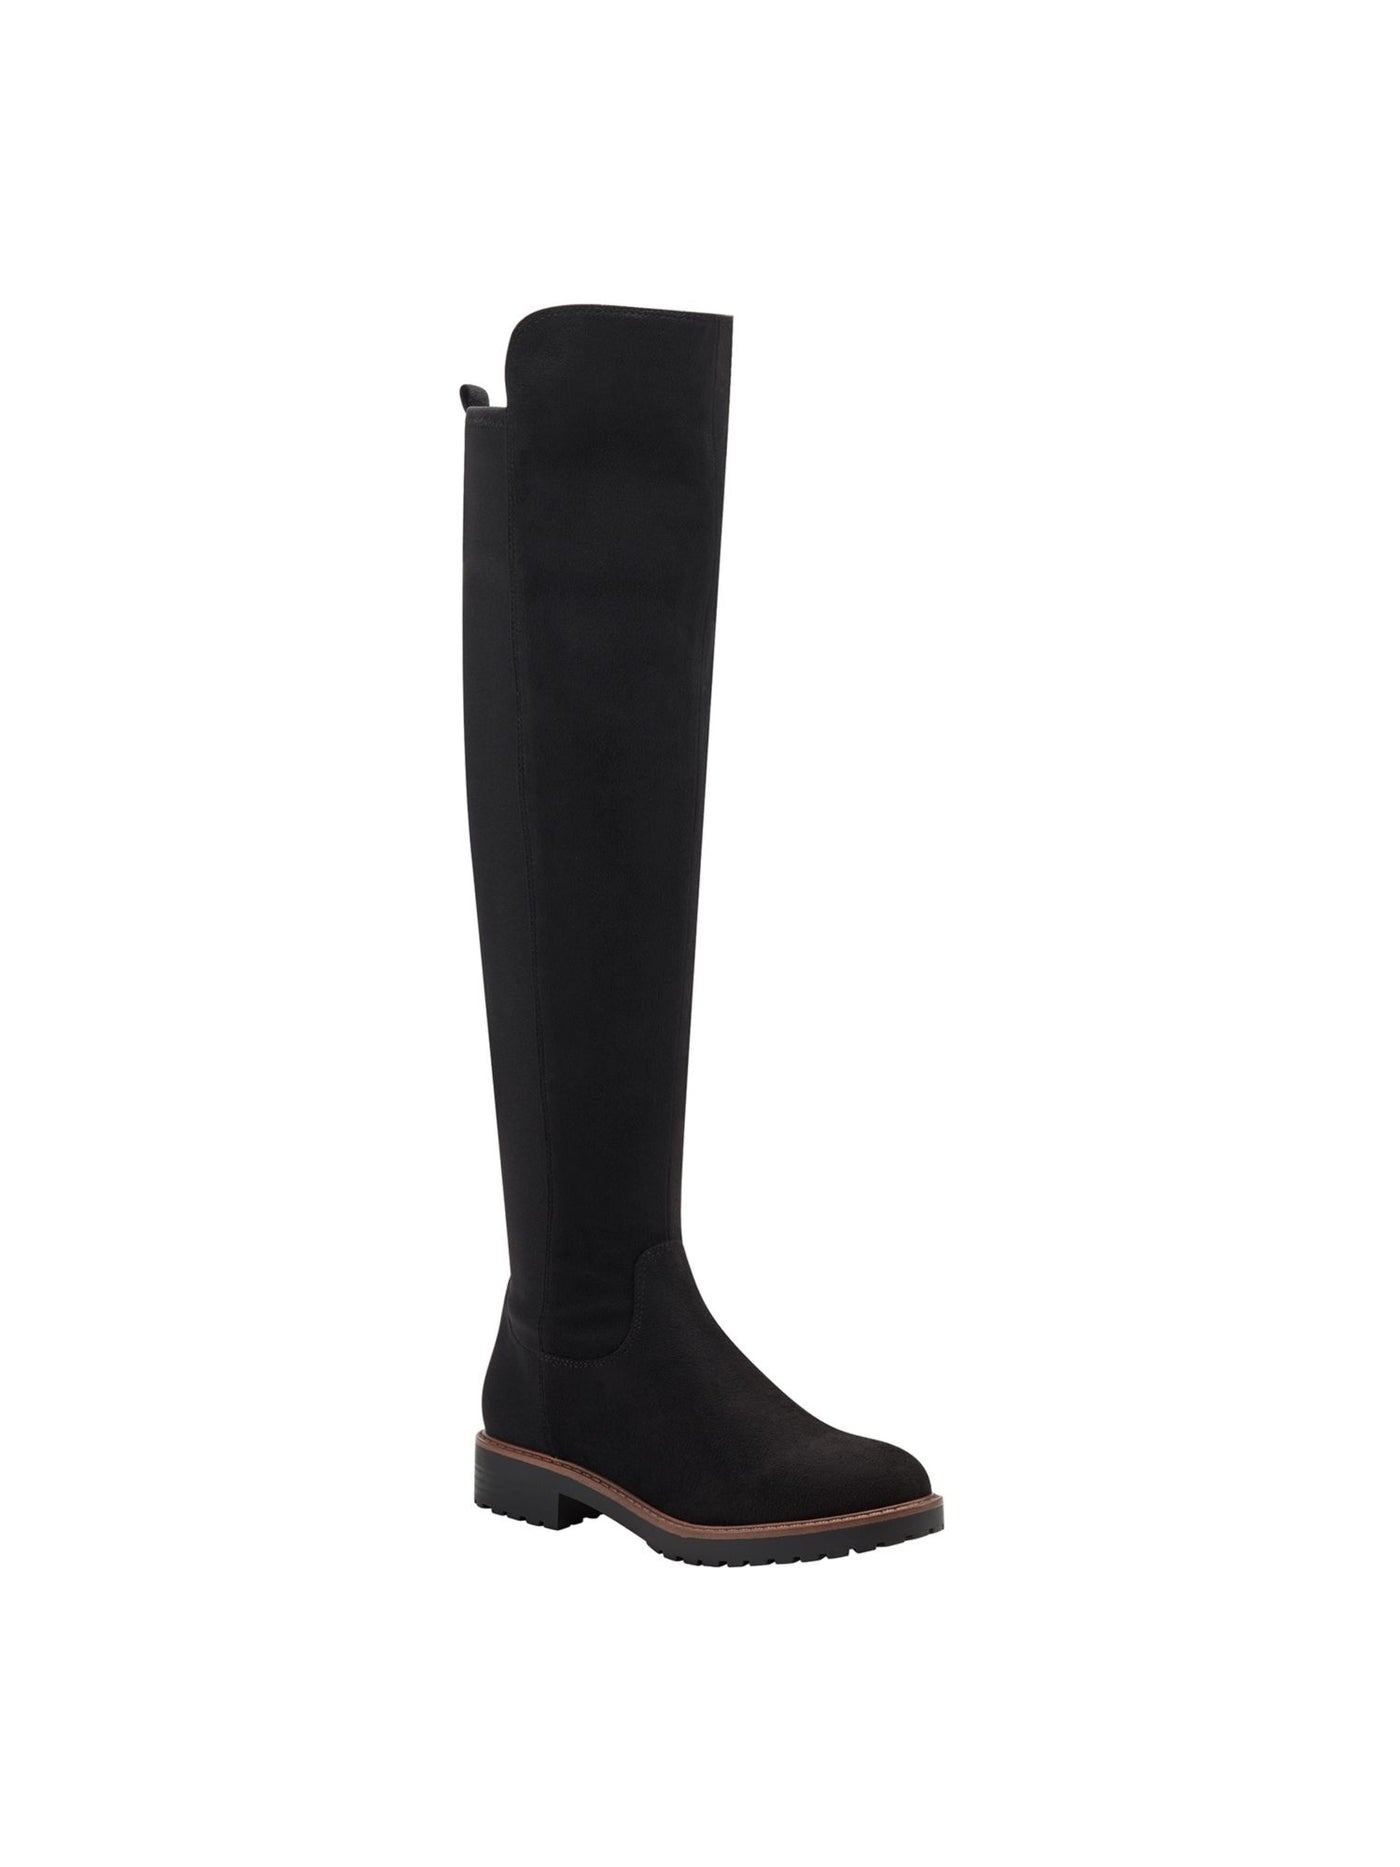 BANDOLINO Womens Black Padded Faithe Round Toe Block Heel Zip-Up Boots Shoes 7 M